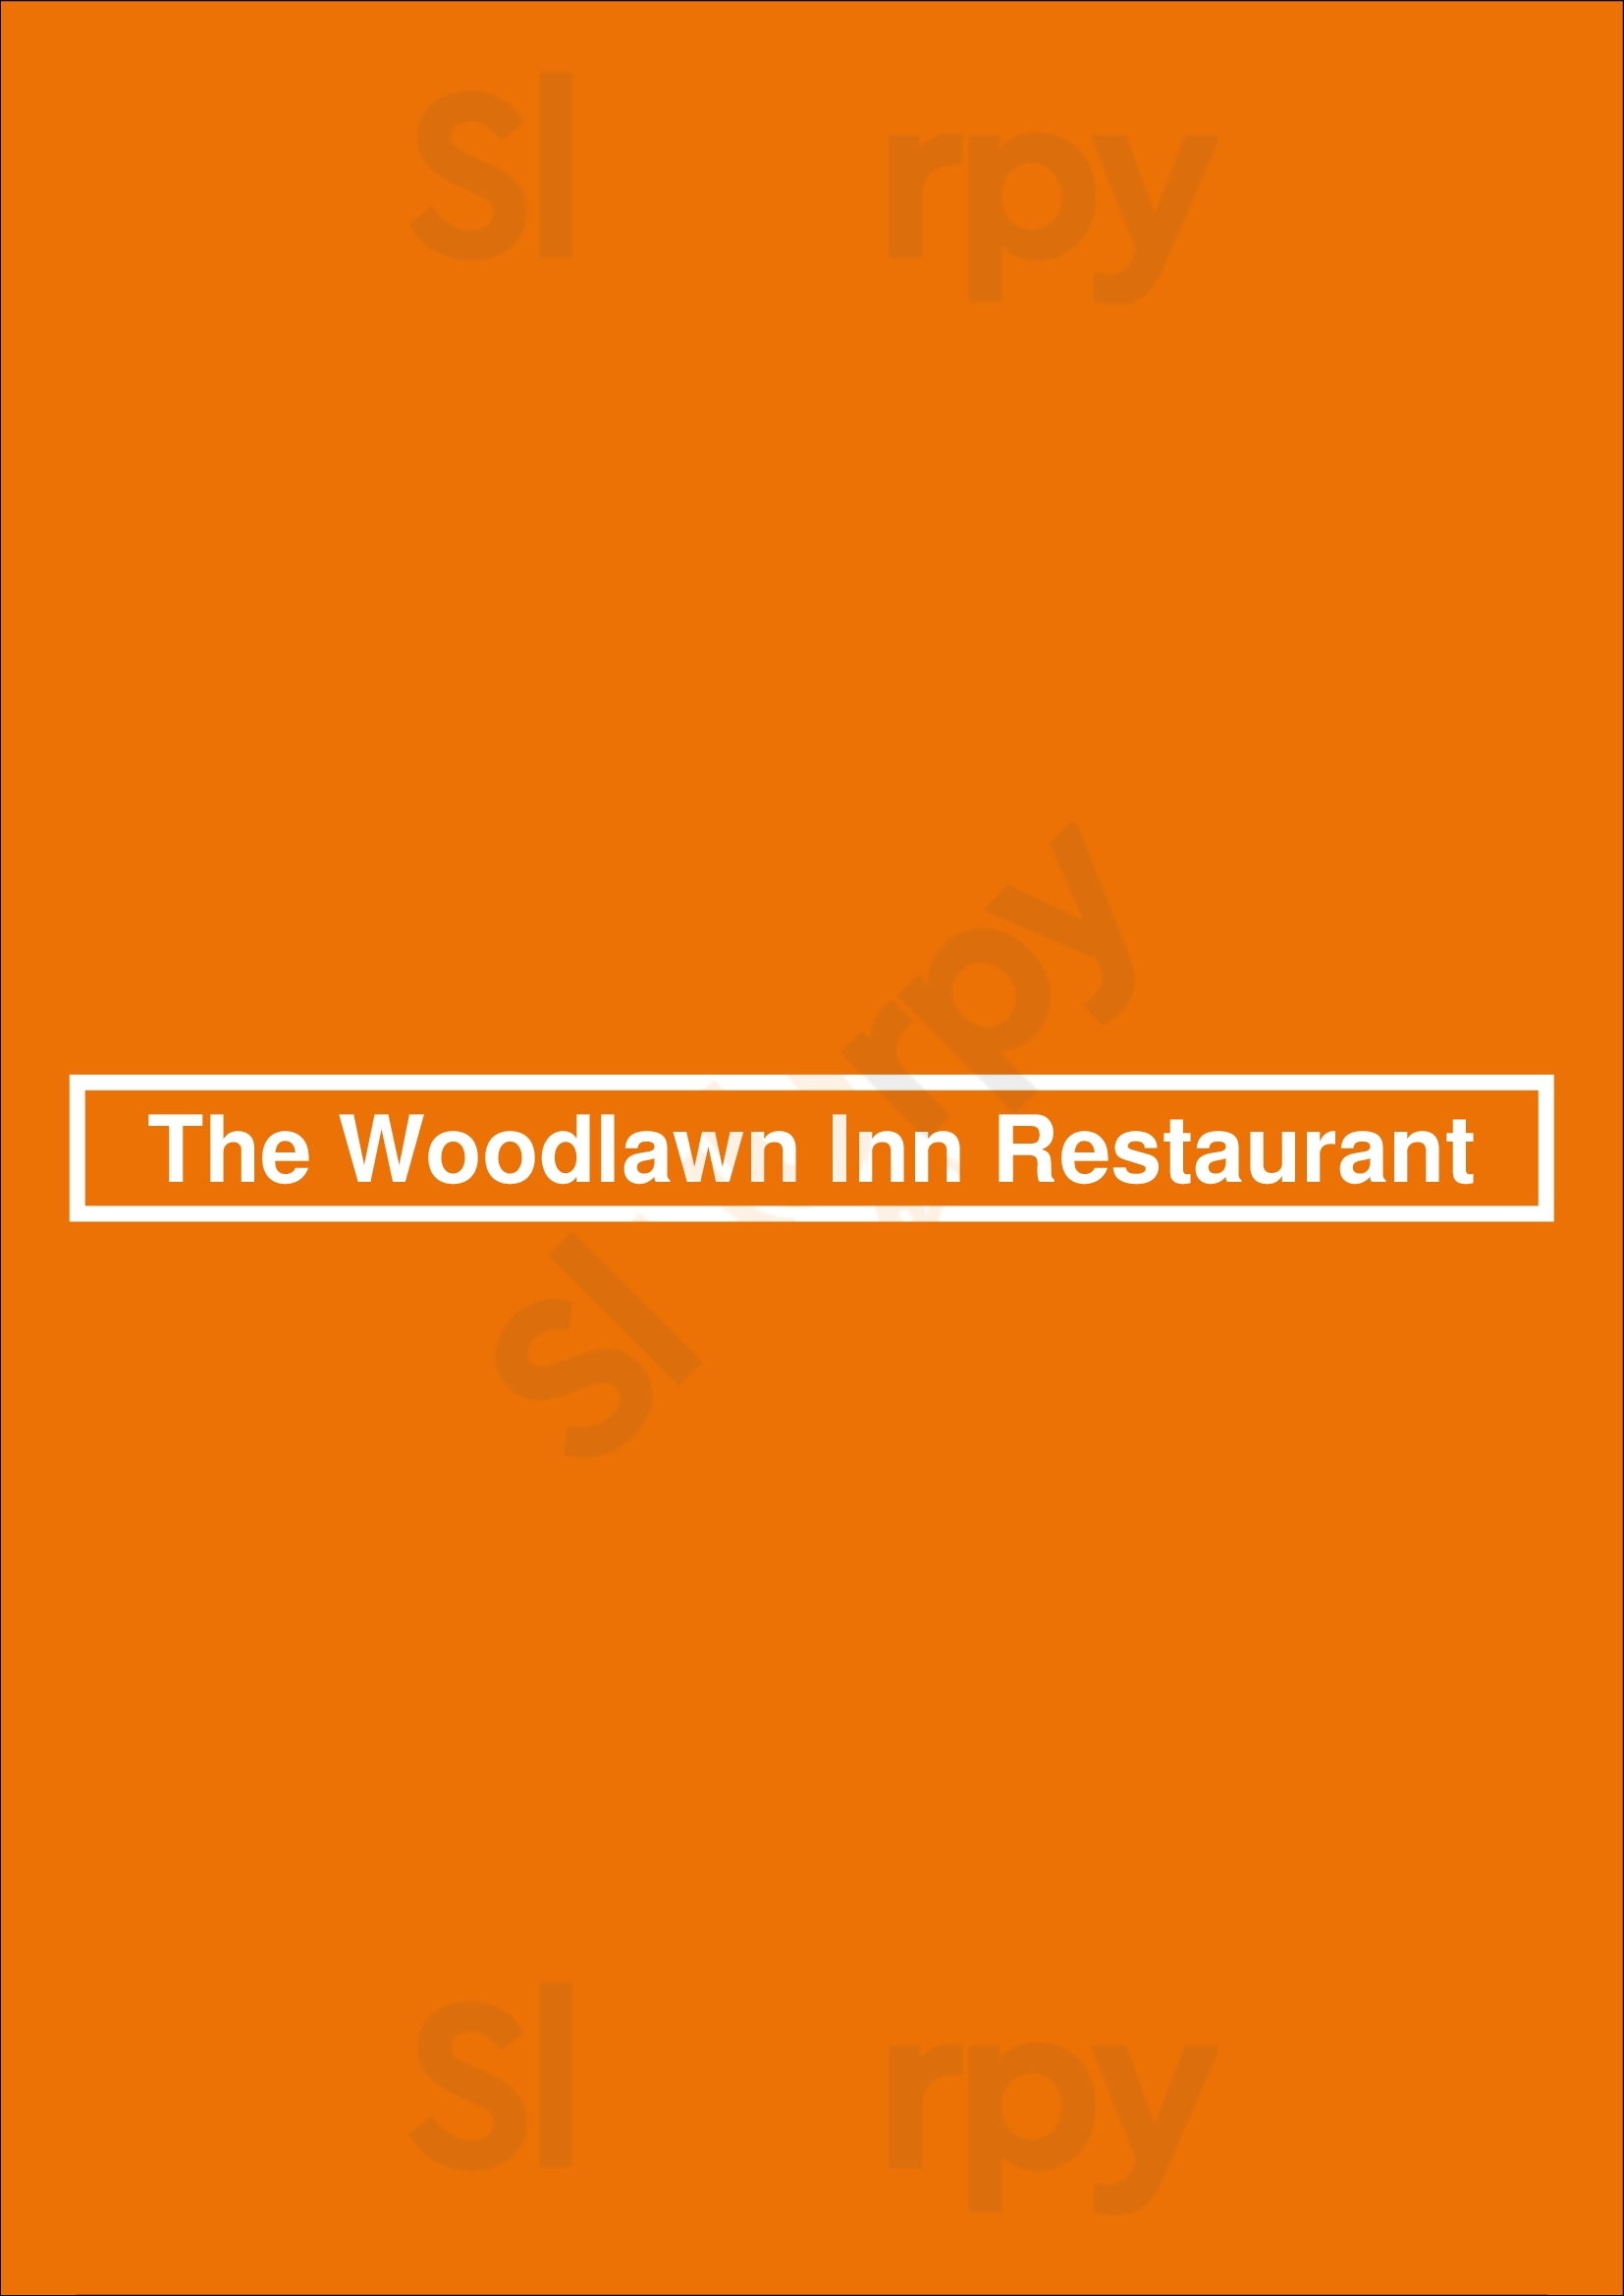 The Woodlawn Inn Restaurant Cobourg Menu - 1